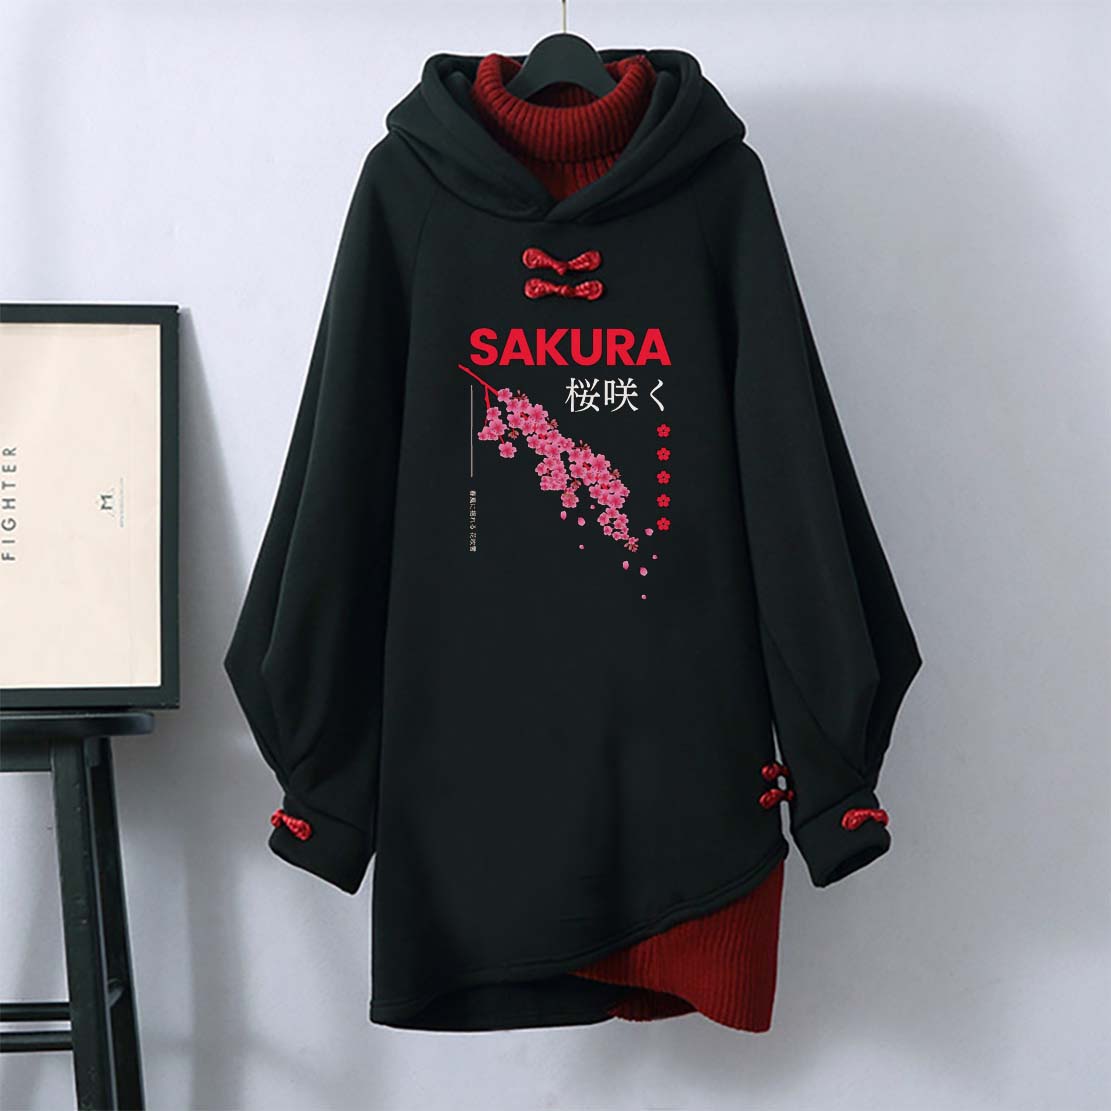 Sakura Letter Buckle Vintage Hooded Sweatshirt Dress